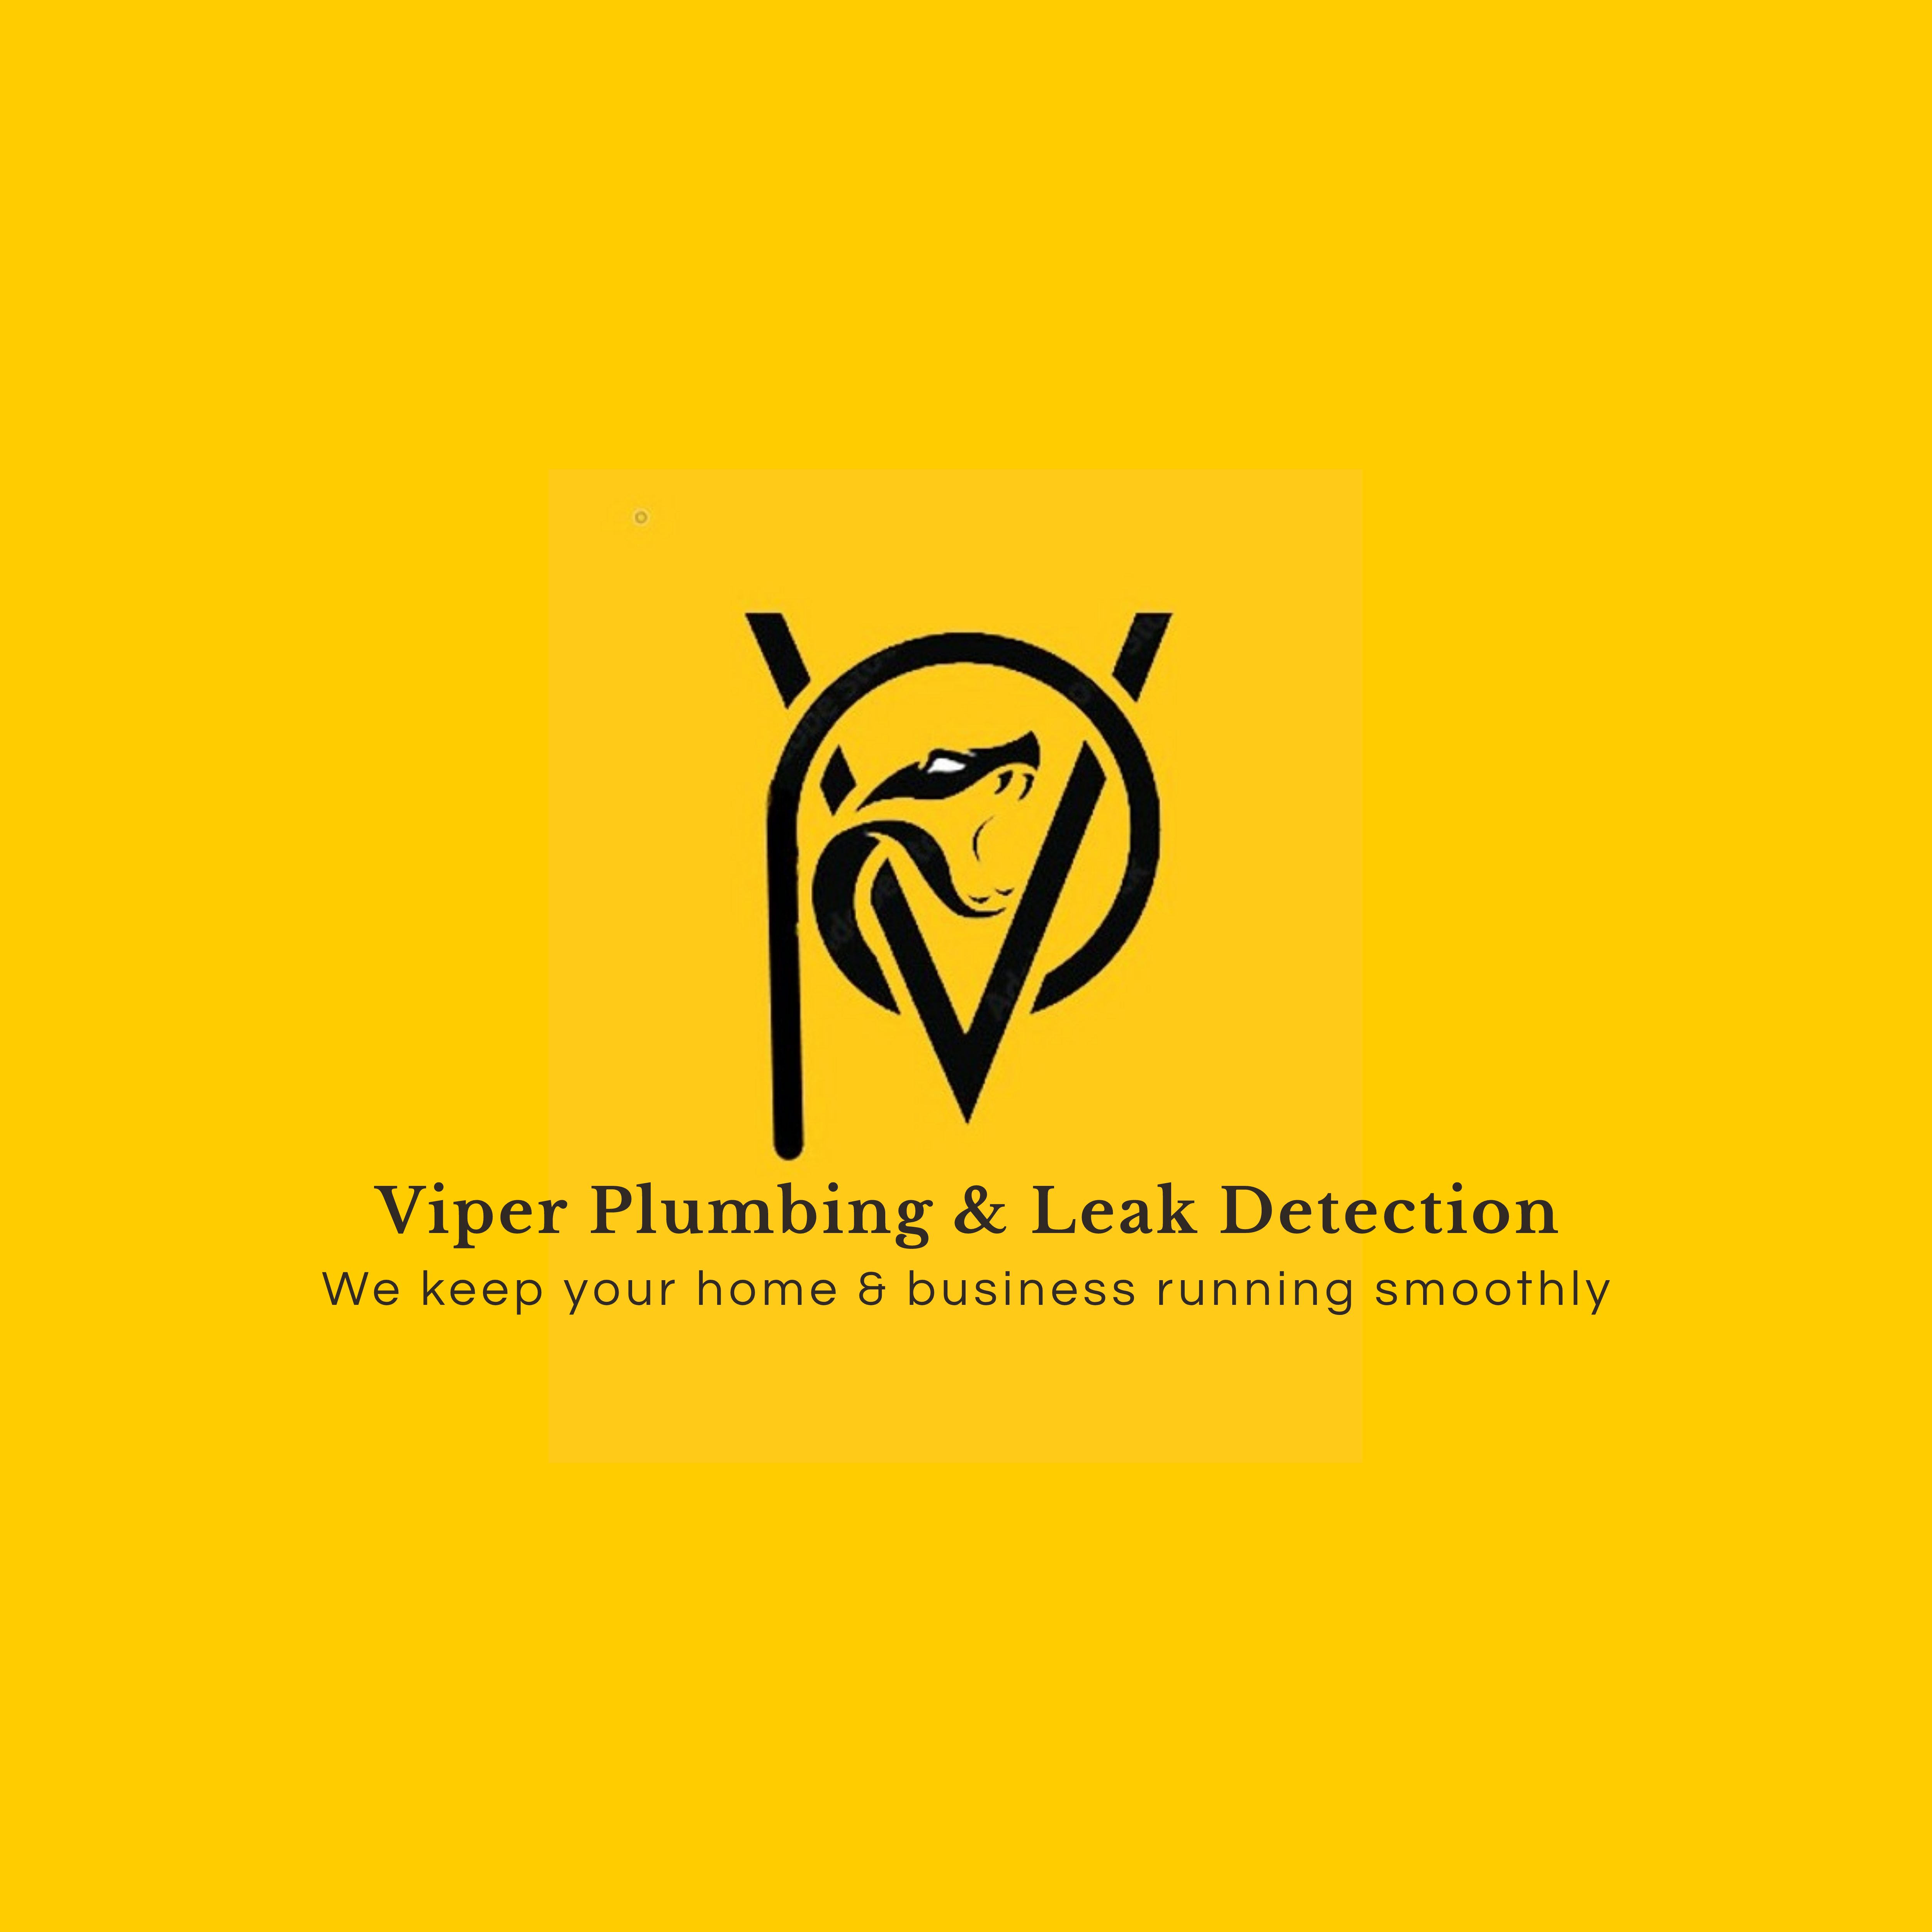 Viper Plumbing & Leak Detection Services Logo